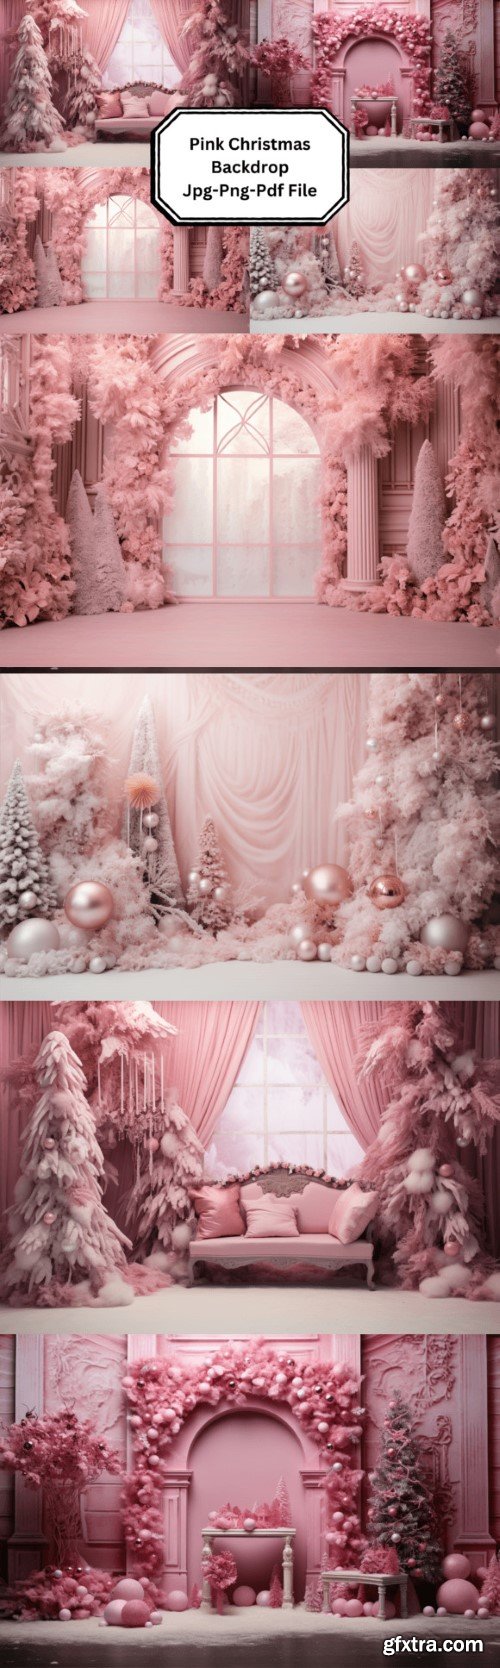 Pink Christmas Backdrops